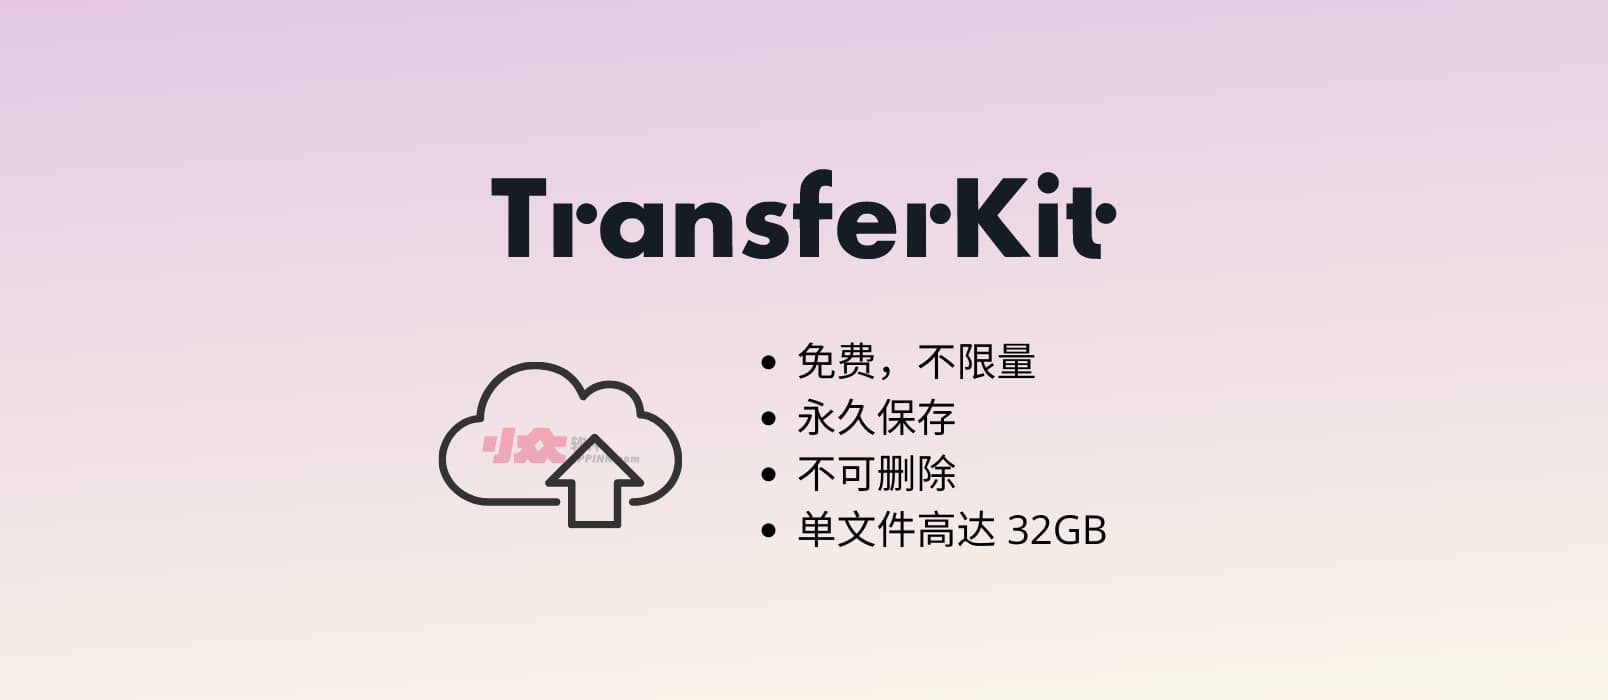 TransferKit - 不限量，免费云存储空间，永久保存，不可删除，单文件高达 32GB